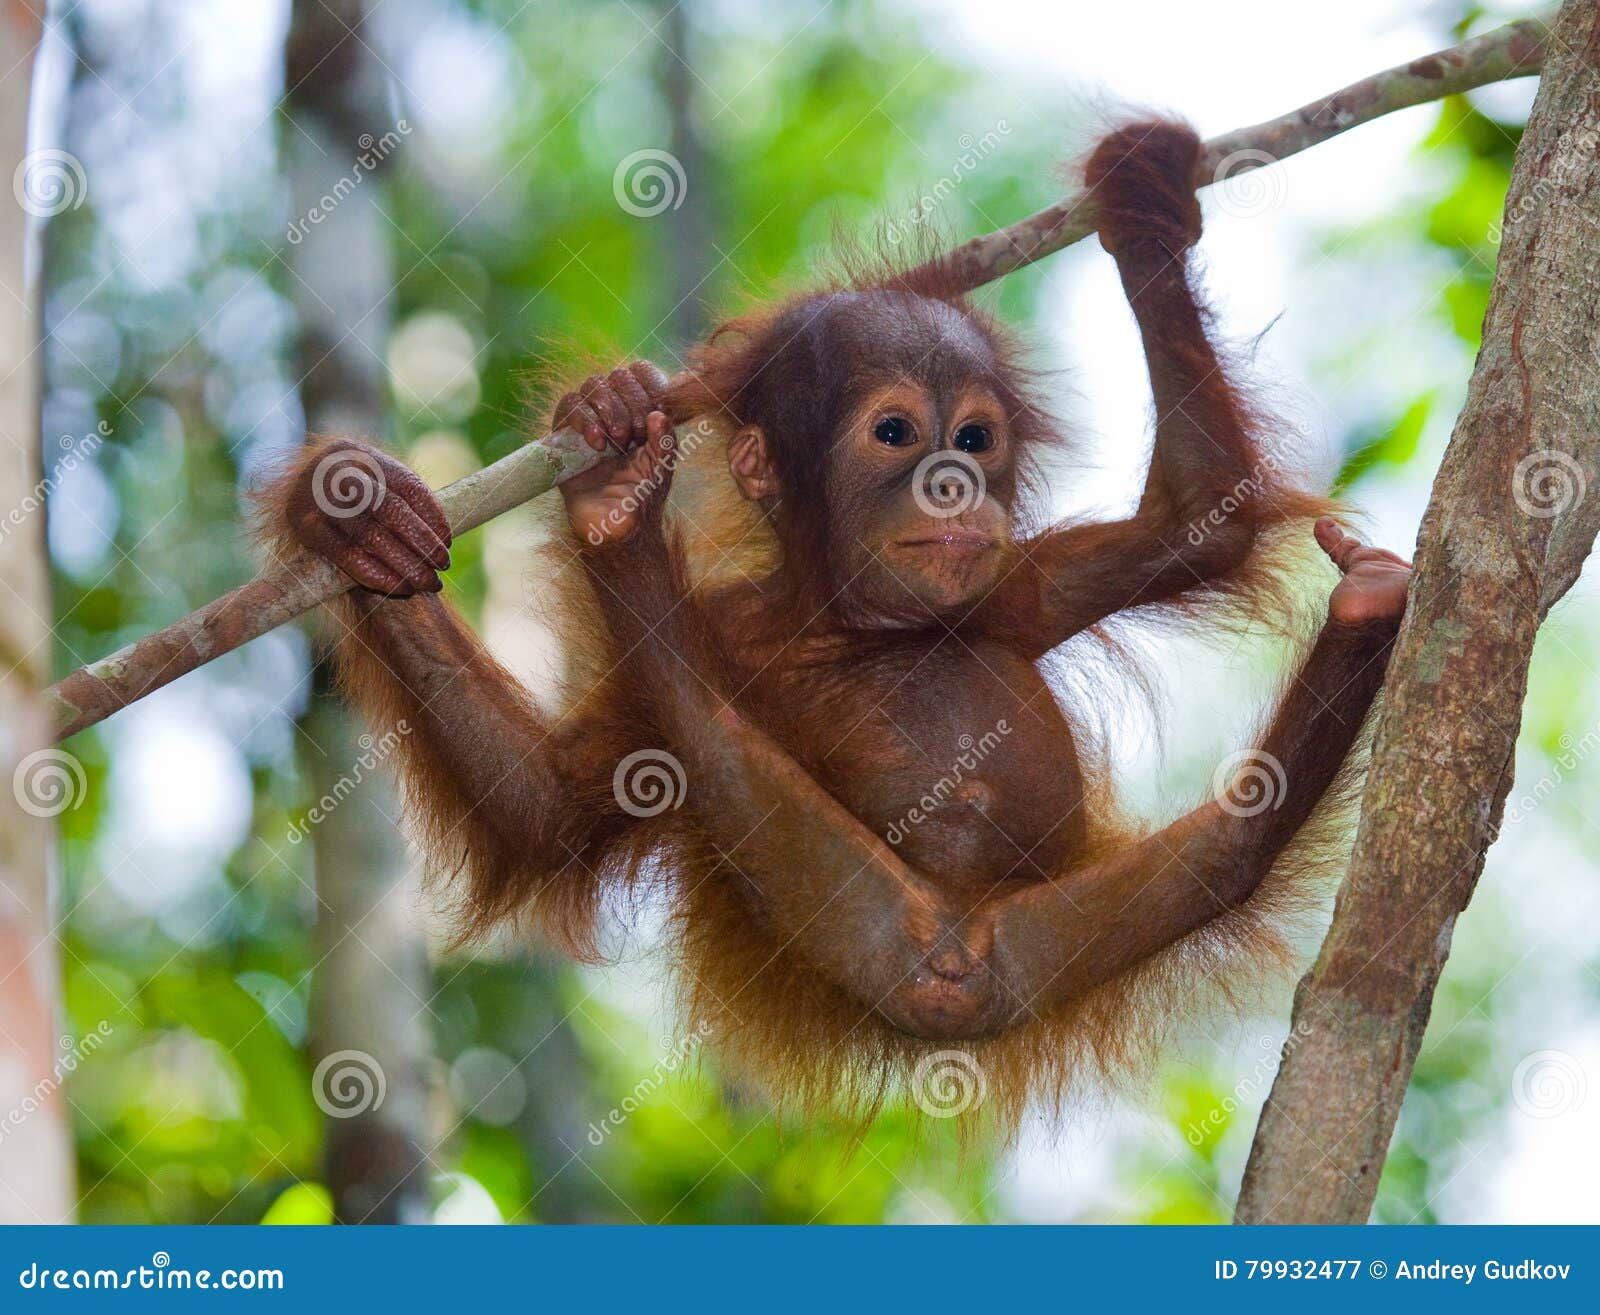 https://thumbs.dreamstime.com/z/baby-orangutan-wild-indonesia-island-kalimantan-borneo-excellent-illustration-79932477.jpg